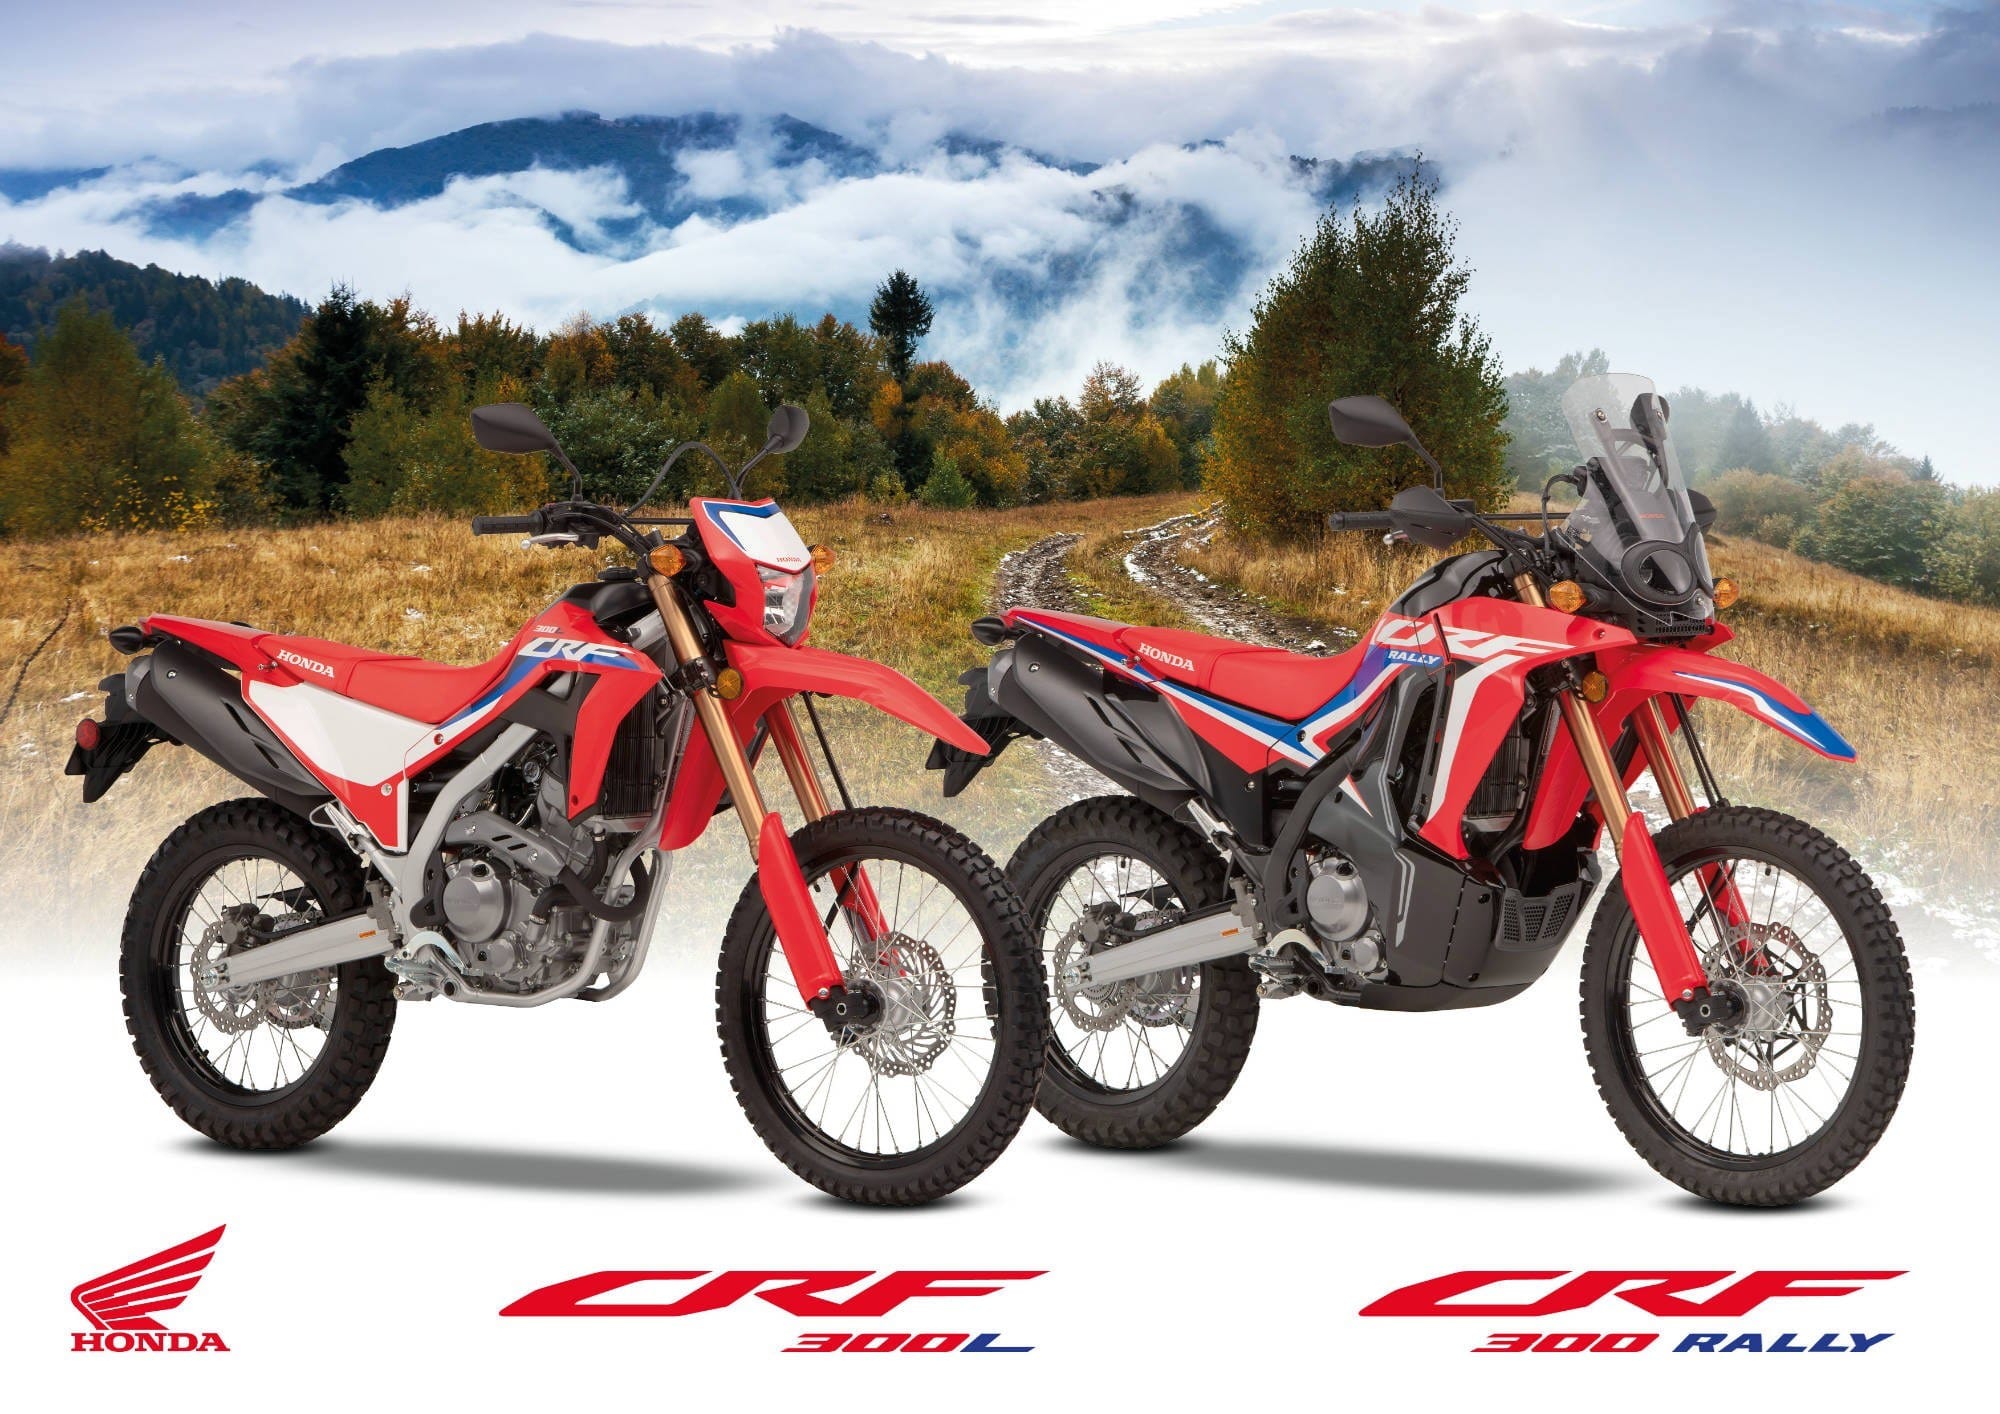 Honda CRF300L CRF300_RALLY_Honda_s_lightweight_dual-purpose_bikes